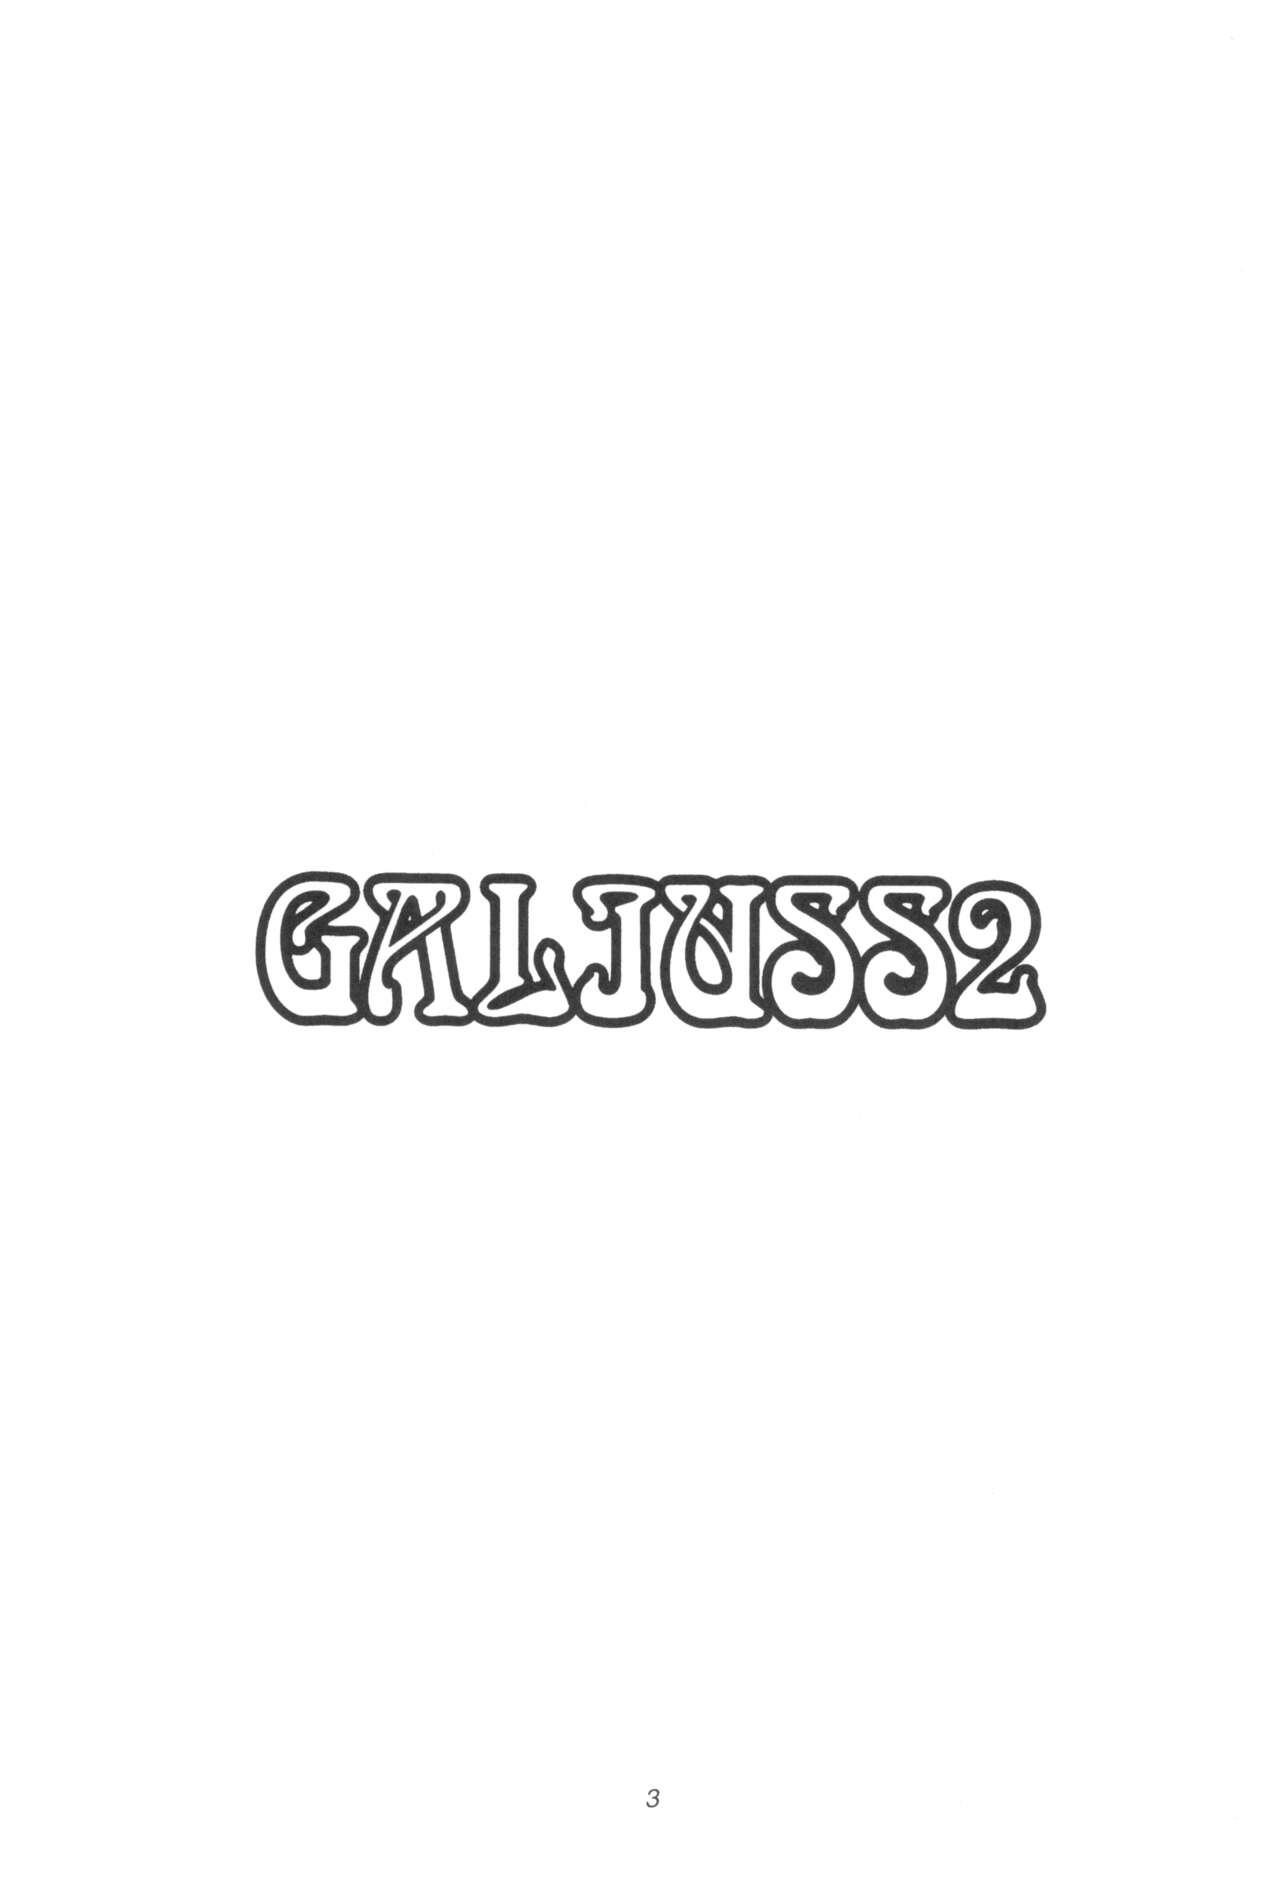 GALIUSS2 2